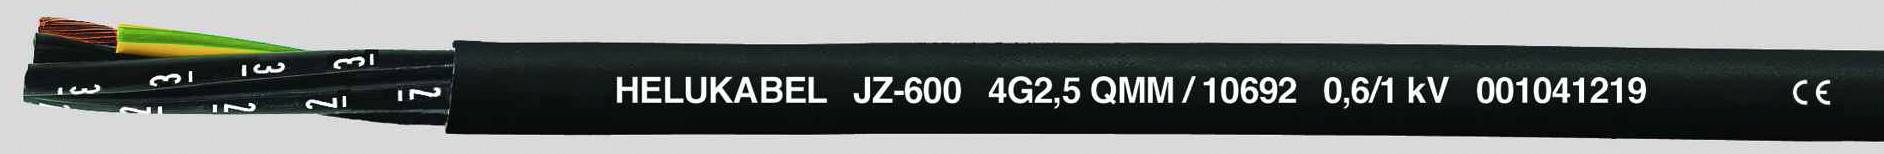 HELUKABEL JZ-600 Steuerleitung 12 G 0.75 mm² Schwarz 10597-500 500 m